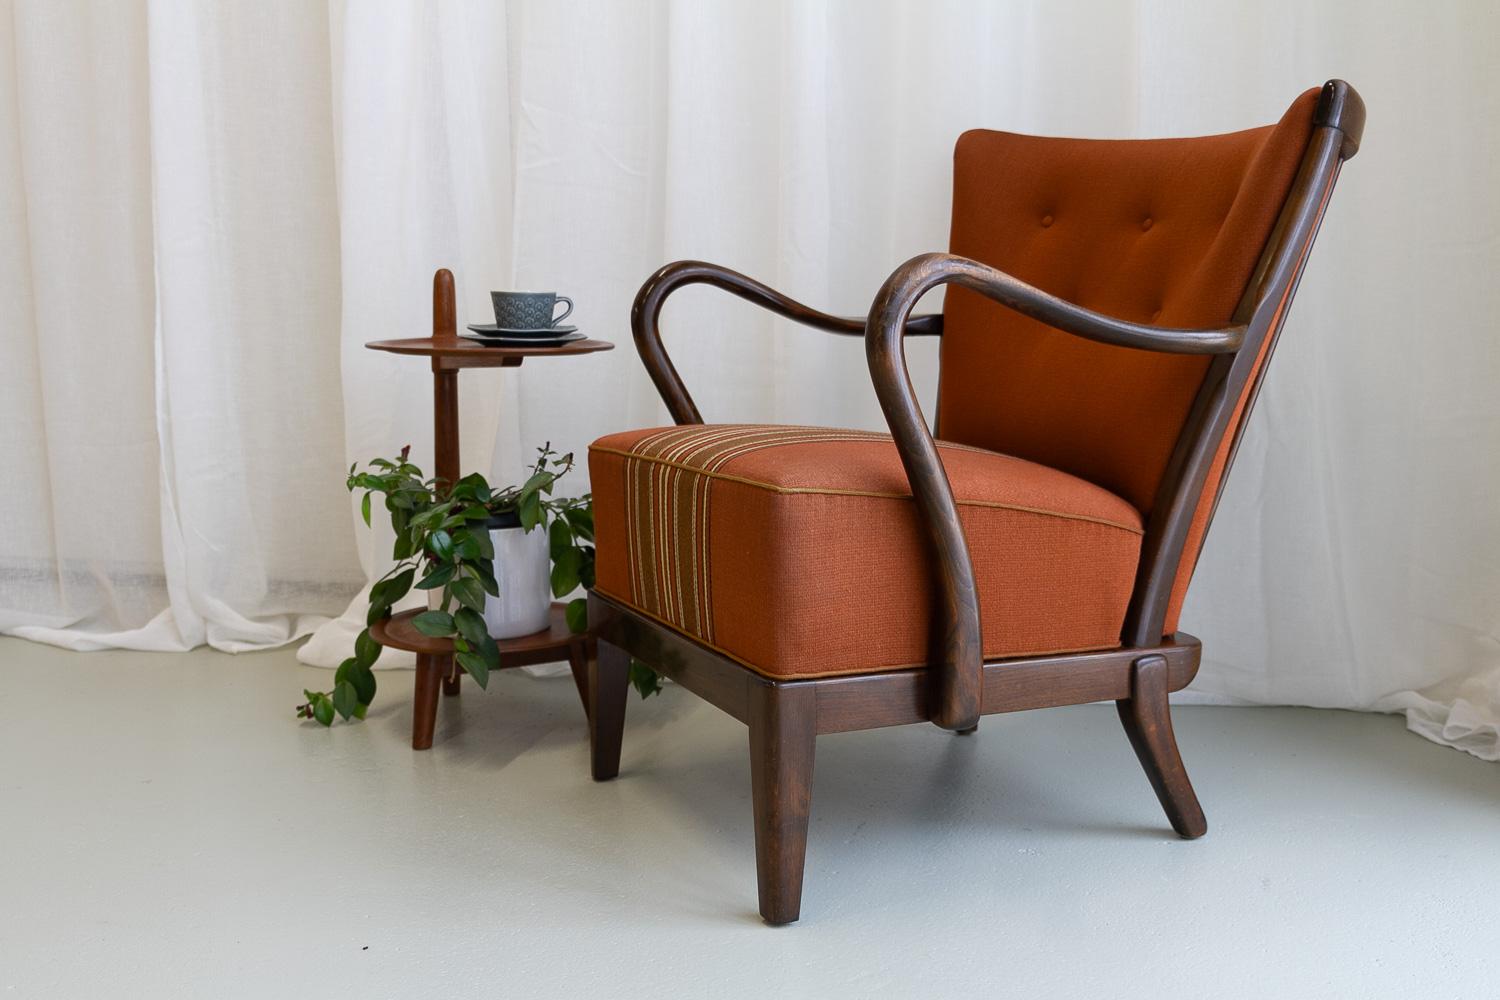 Mid-Century Modern Danish Modern Lounge Chair by Alfred Christensen for Slagelse Møbelværk, 1940s.